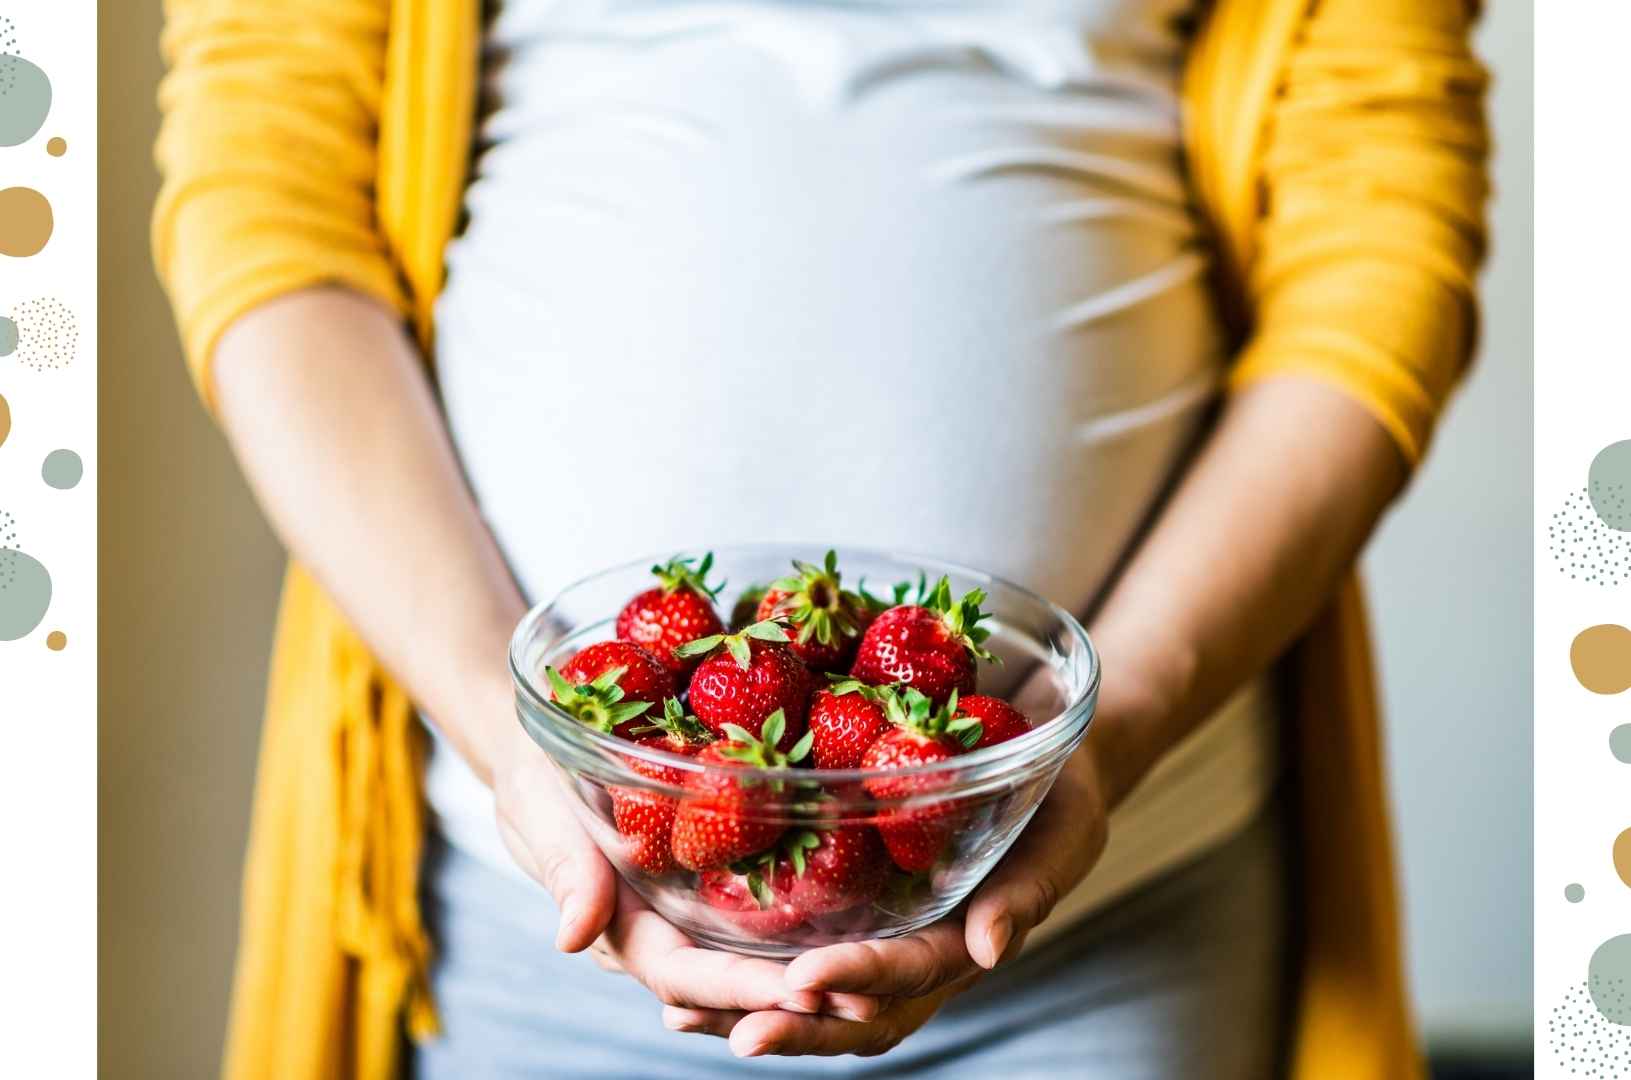 Pregnancy-friendly Foods